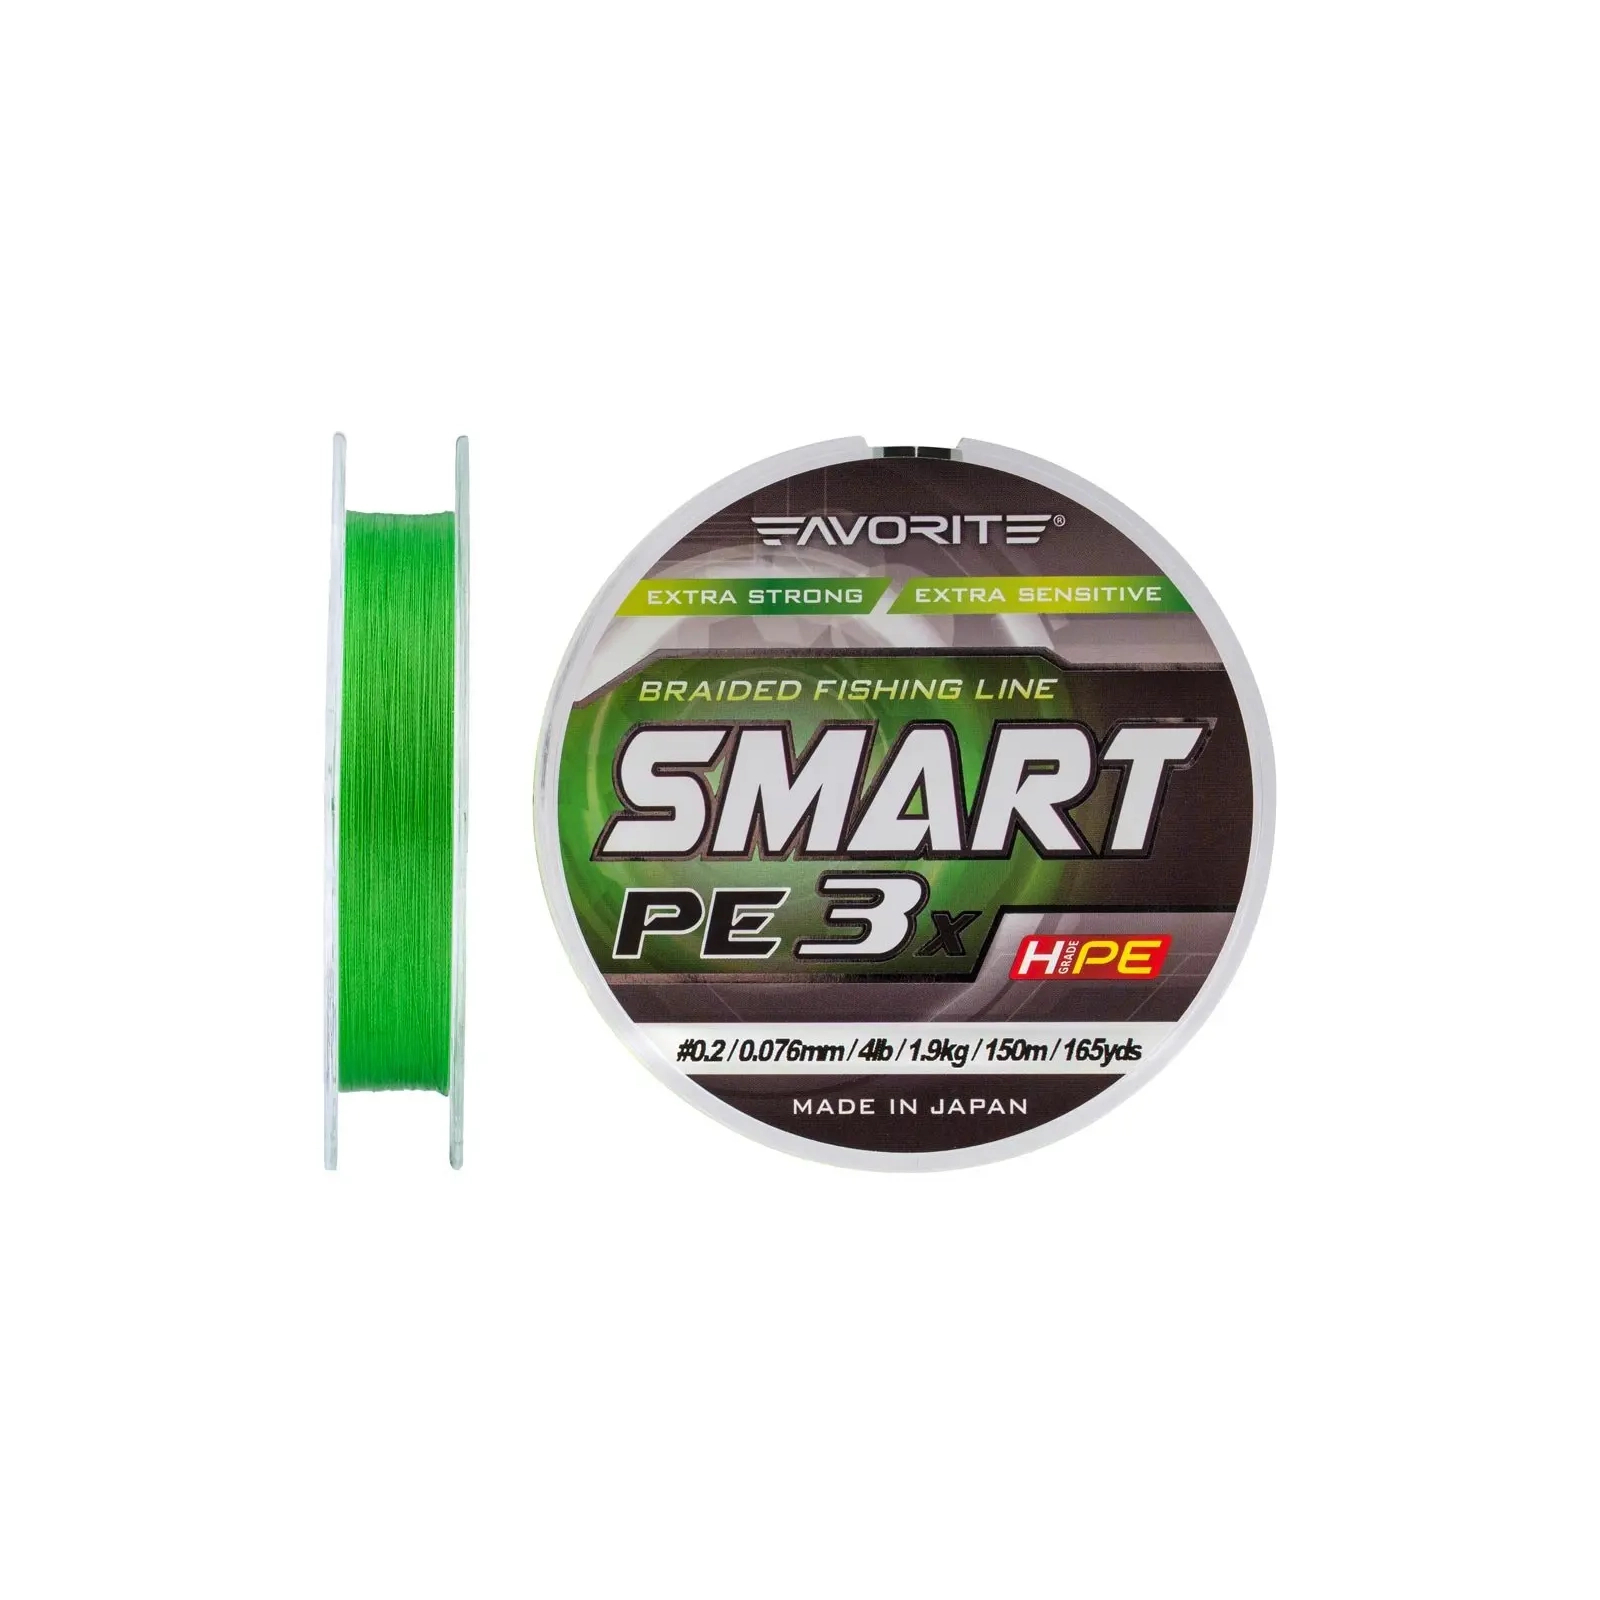 Шнур Favorite Smart PE 3x 150м 0.2/0.076mm 4lb/1.9kg Light Green (1693.10.61) изображение 2